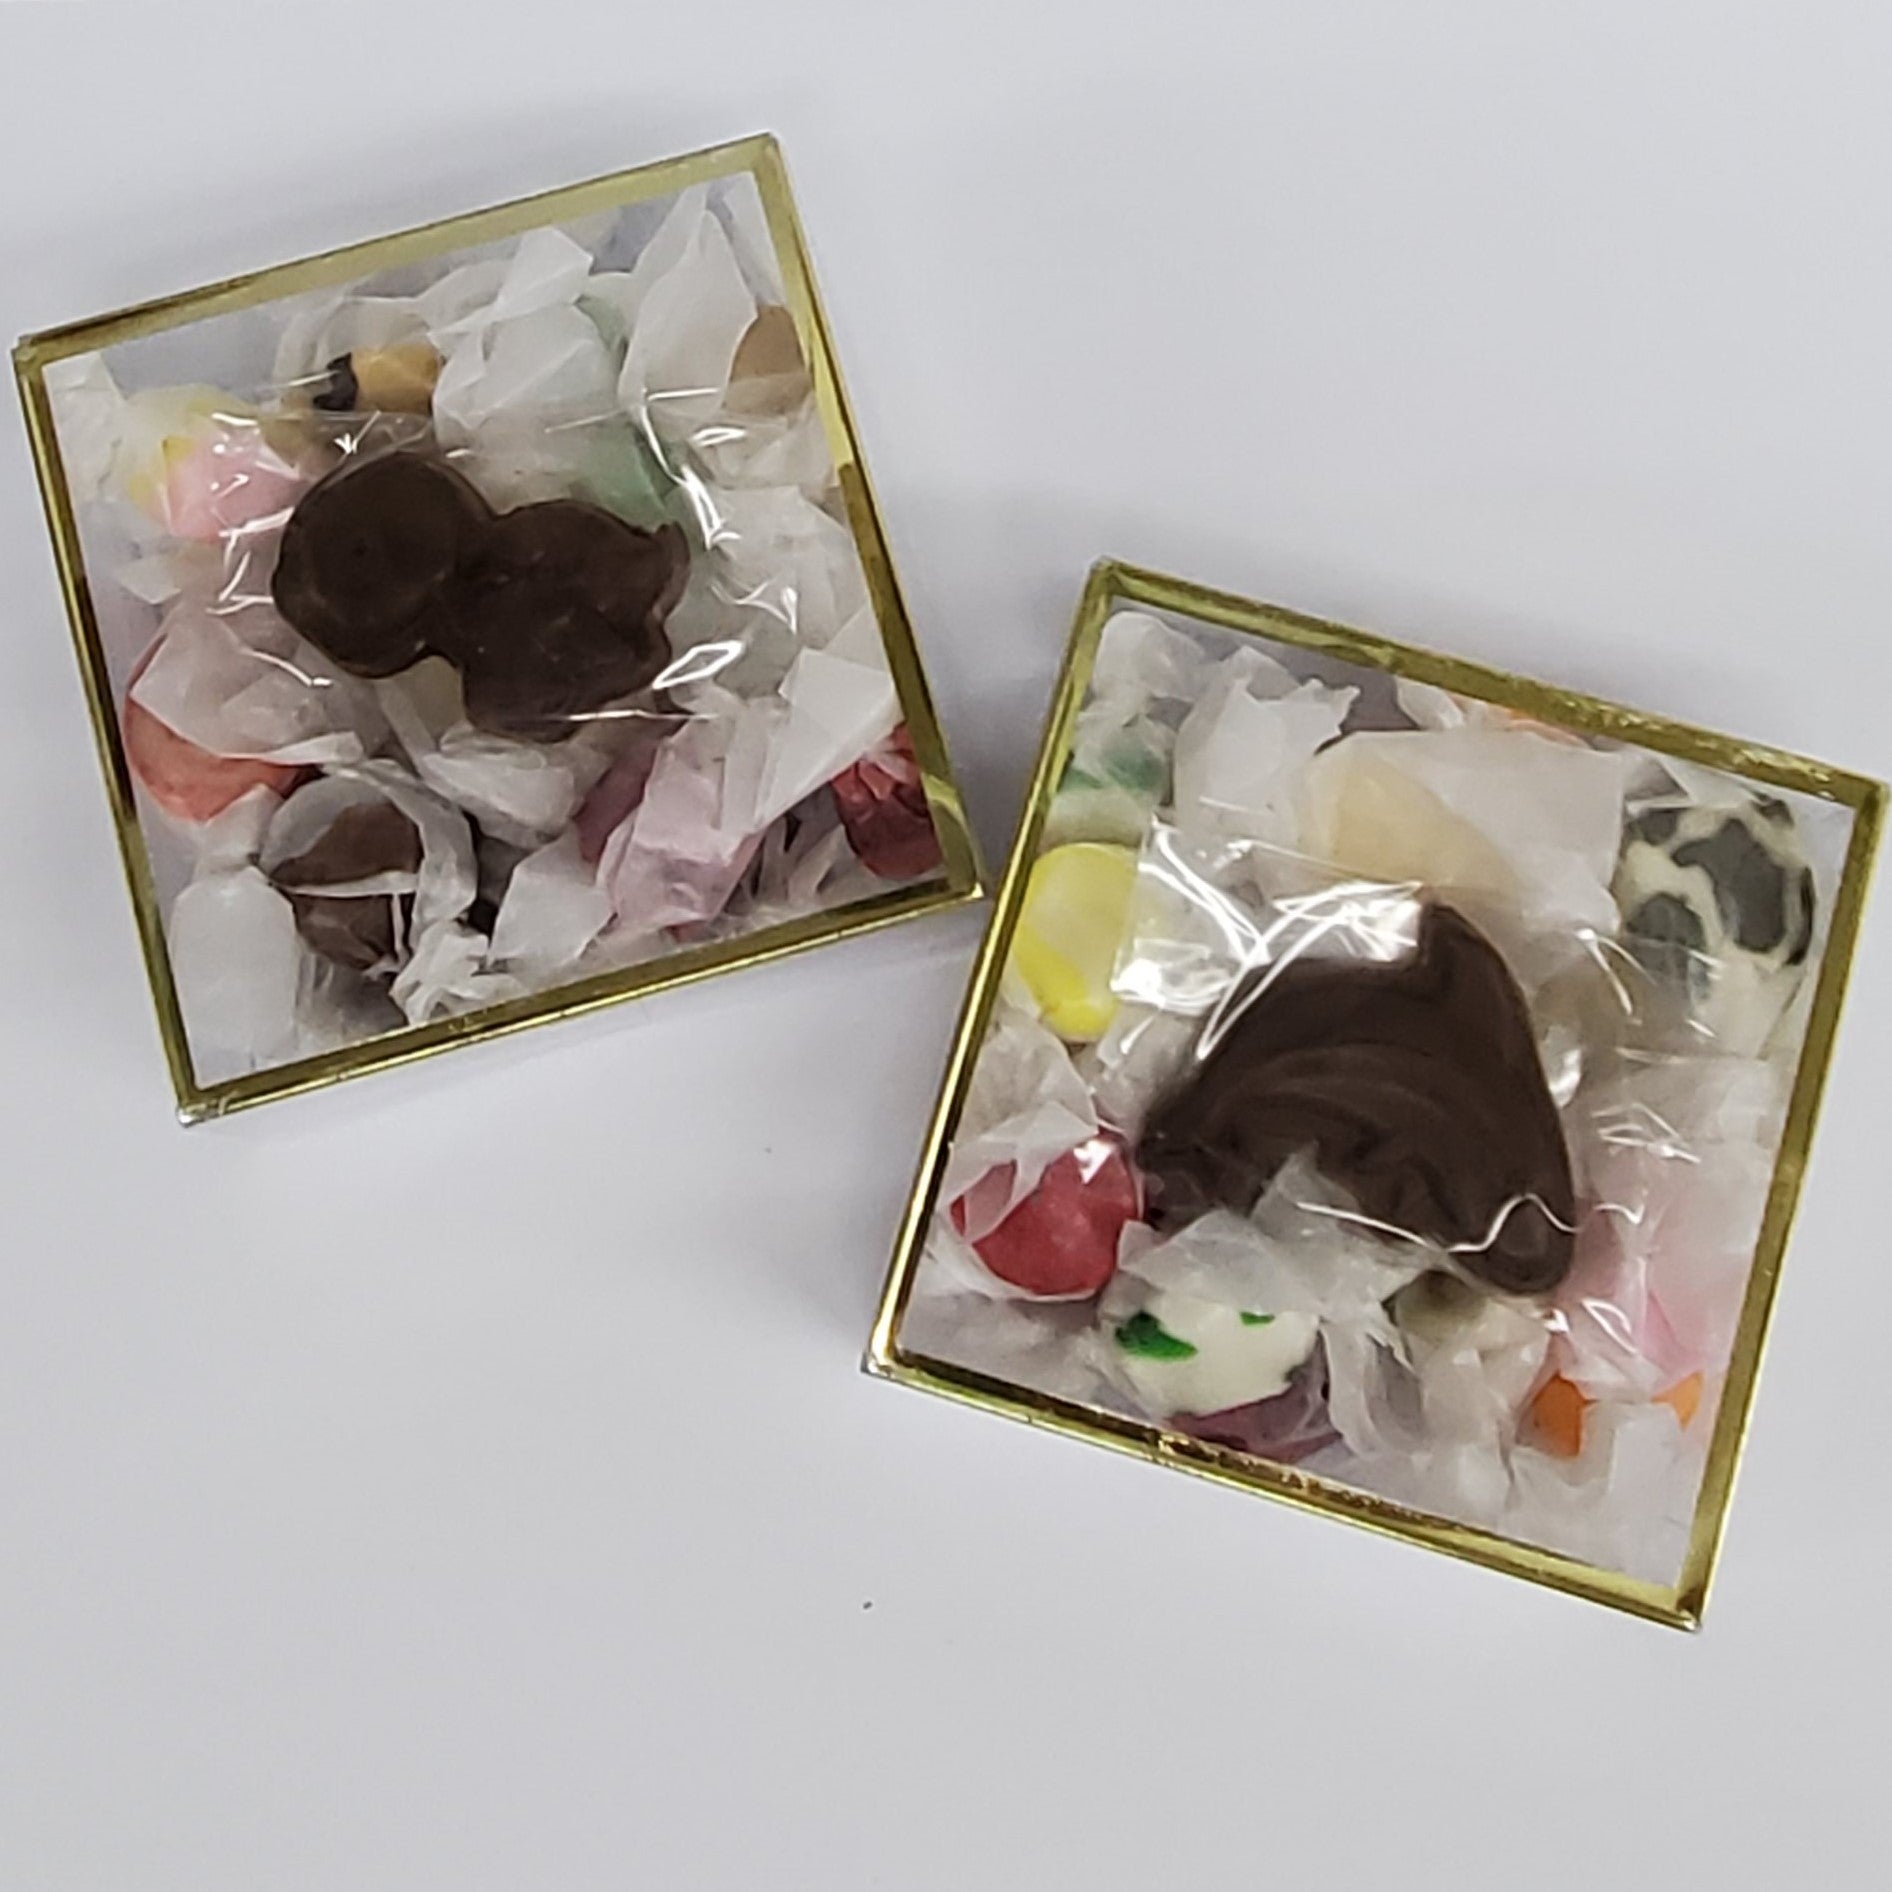 Salt Water Taffy with Chocolate Sea Life Gift Box